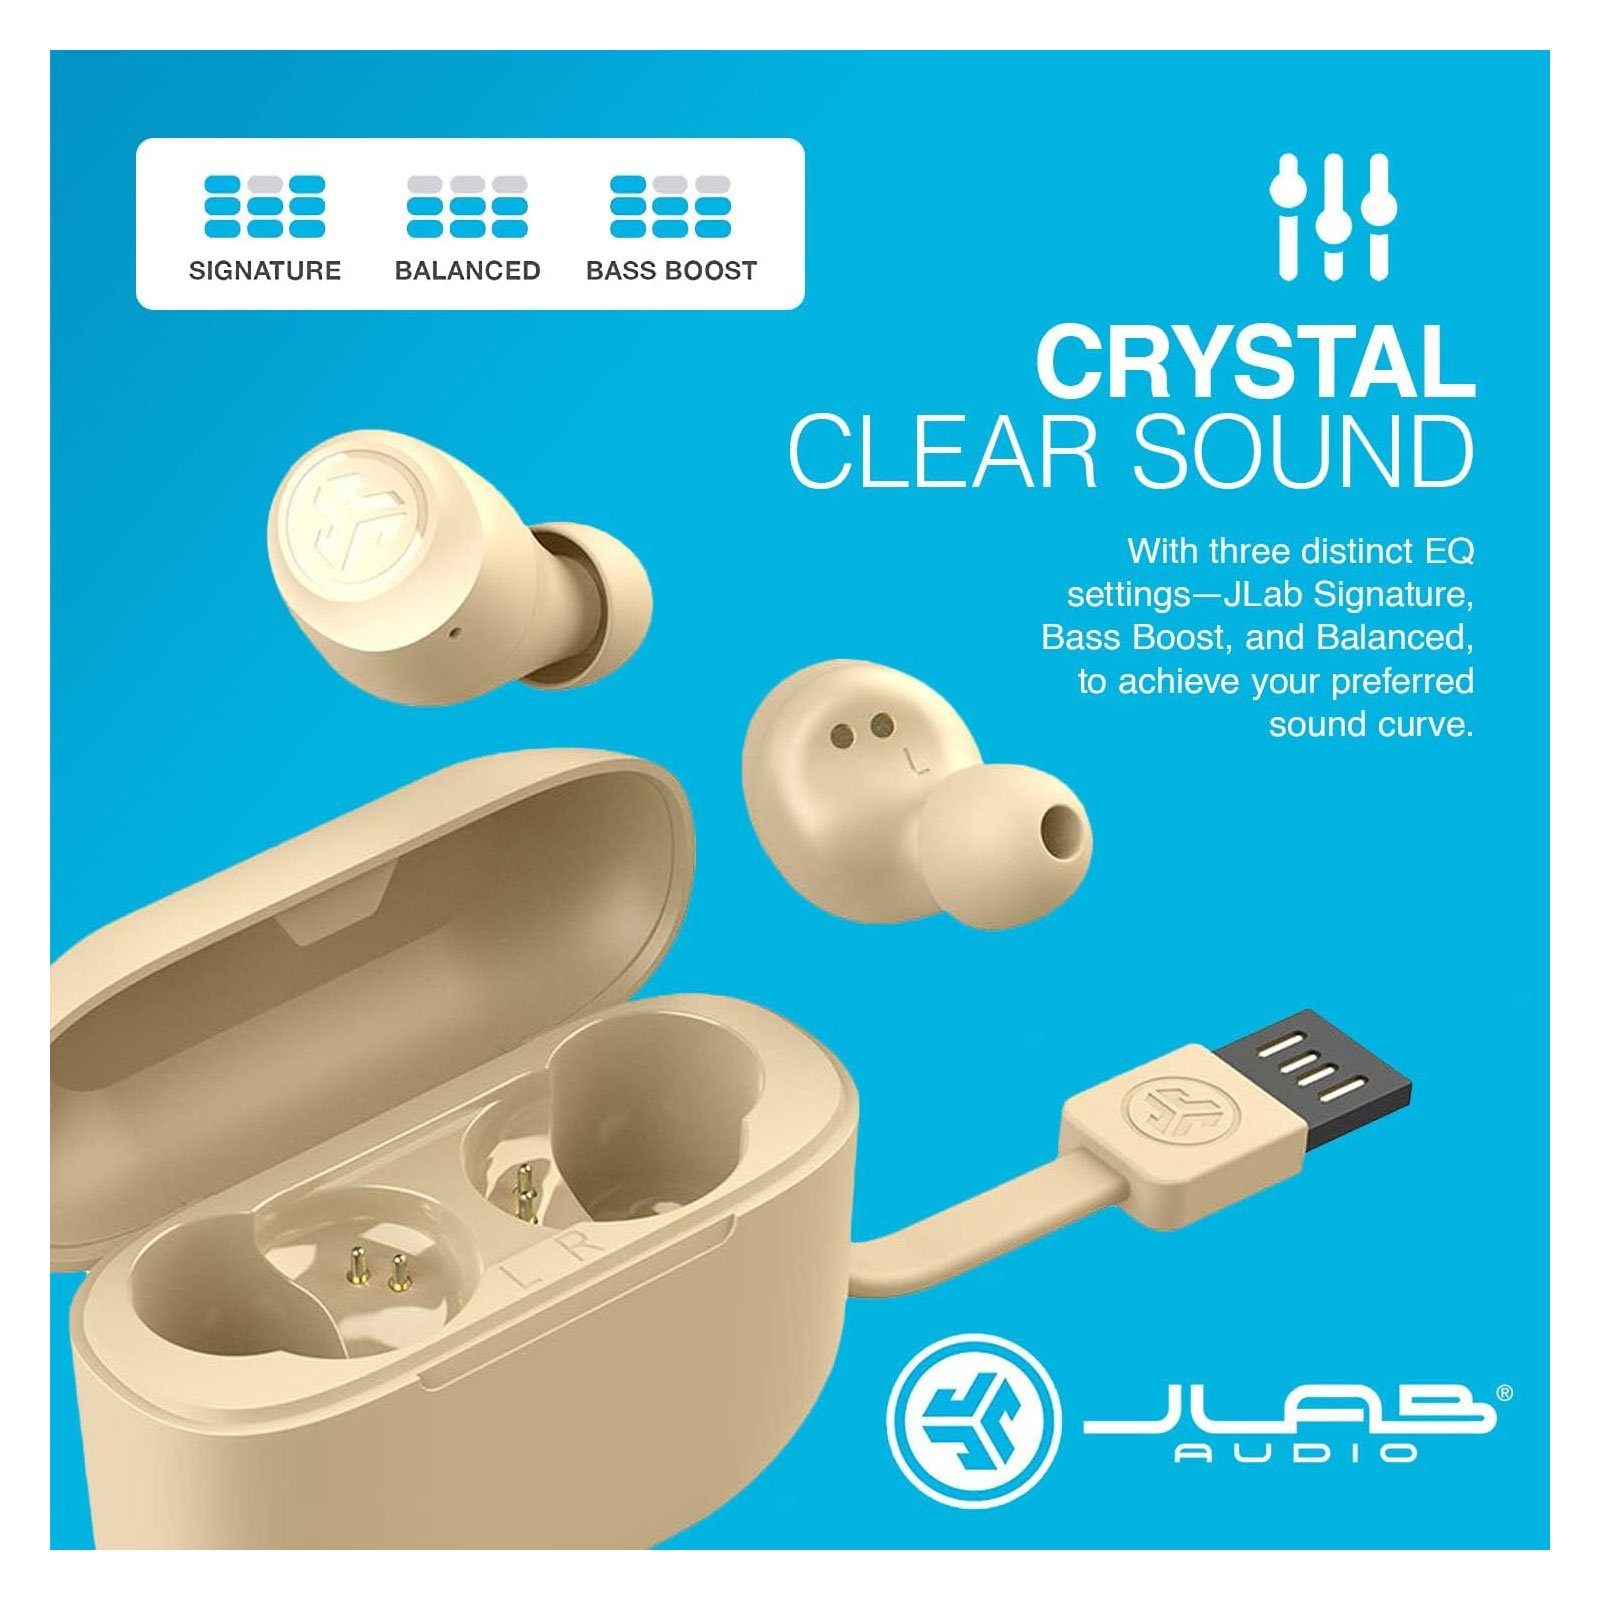 Jlab 155 (TWS, Hauttöne) Go Wireless Earbuds Air True Pantone Touch, USB-Ladecase, EQ3-Sound, Bluetooth, Tones In-Ear-Kopfhörer